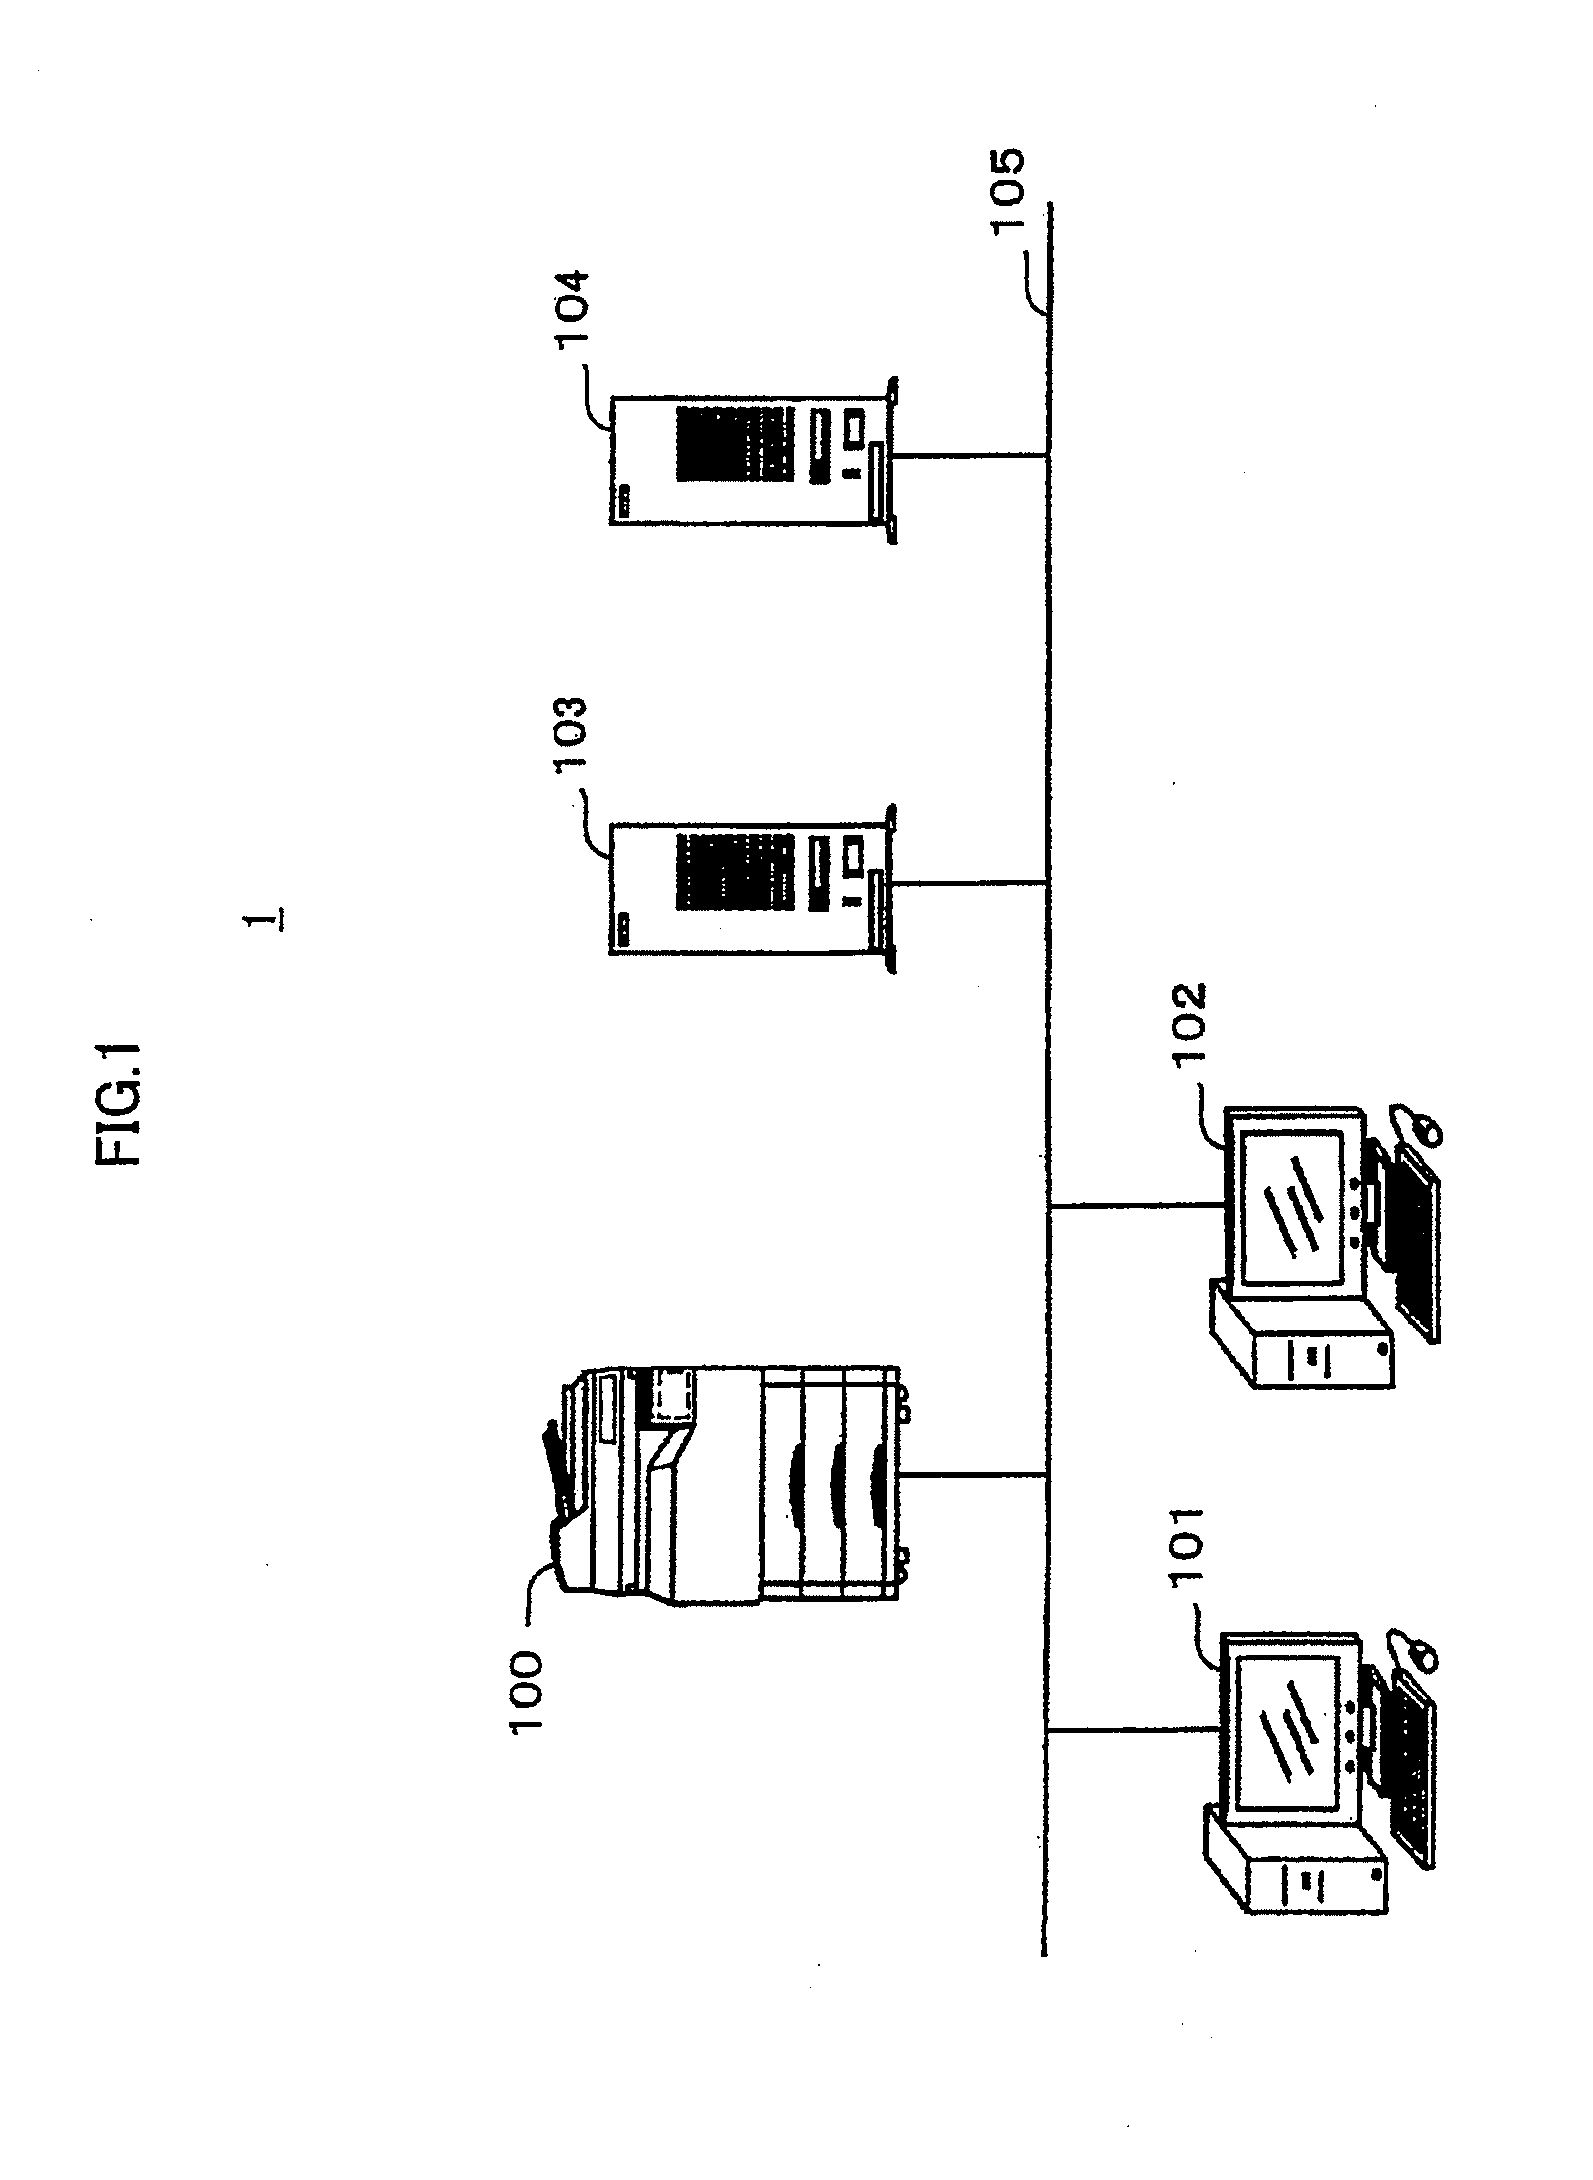 Image forming apparatus, printing system and printing method